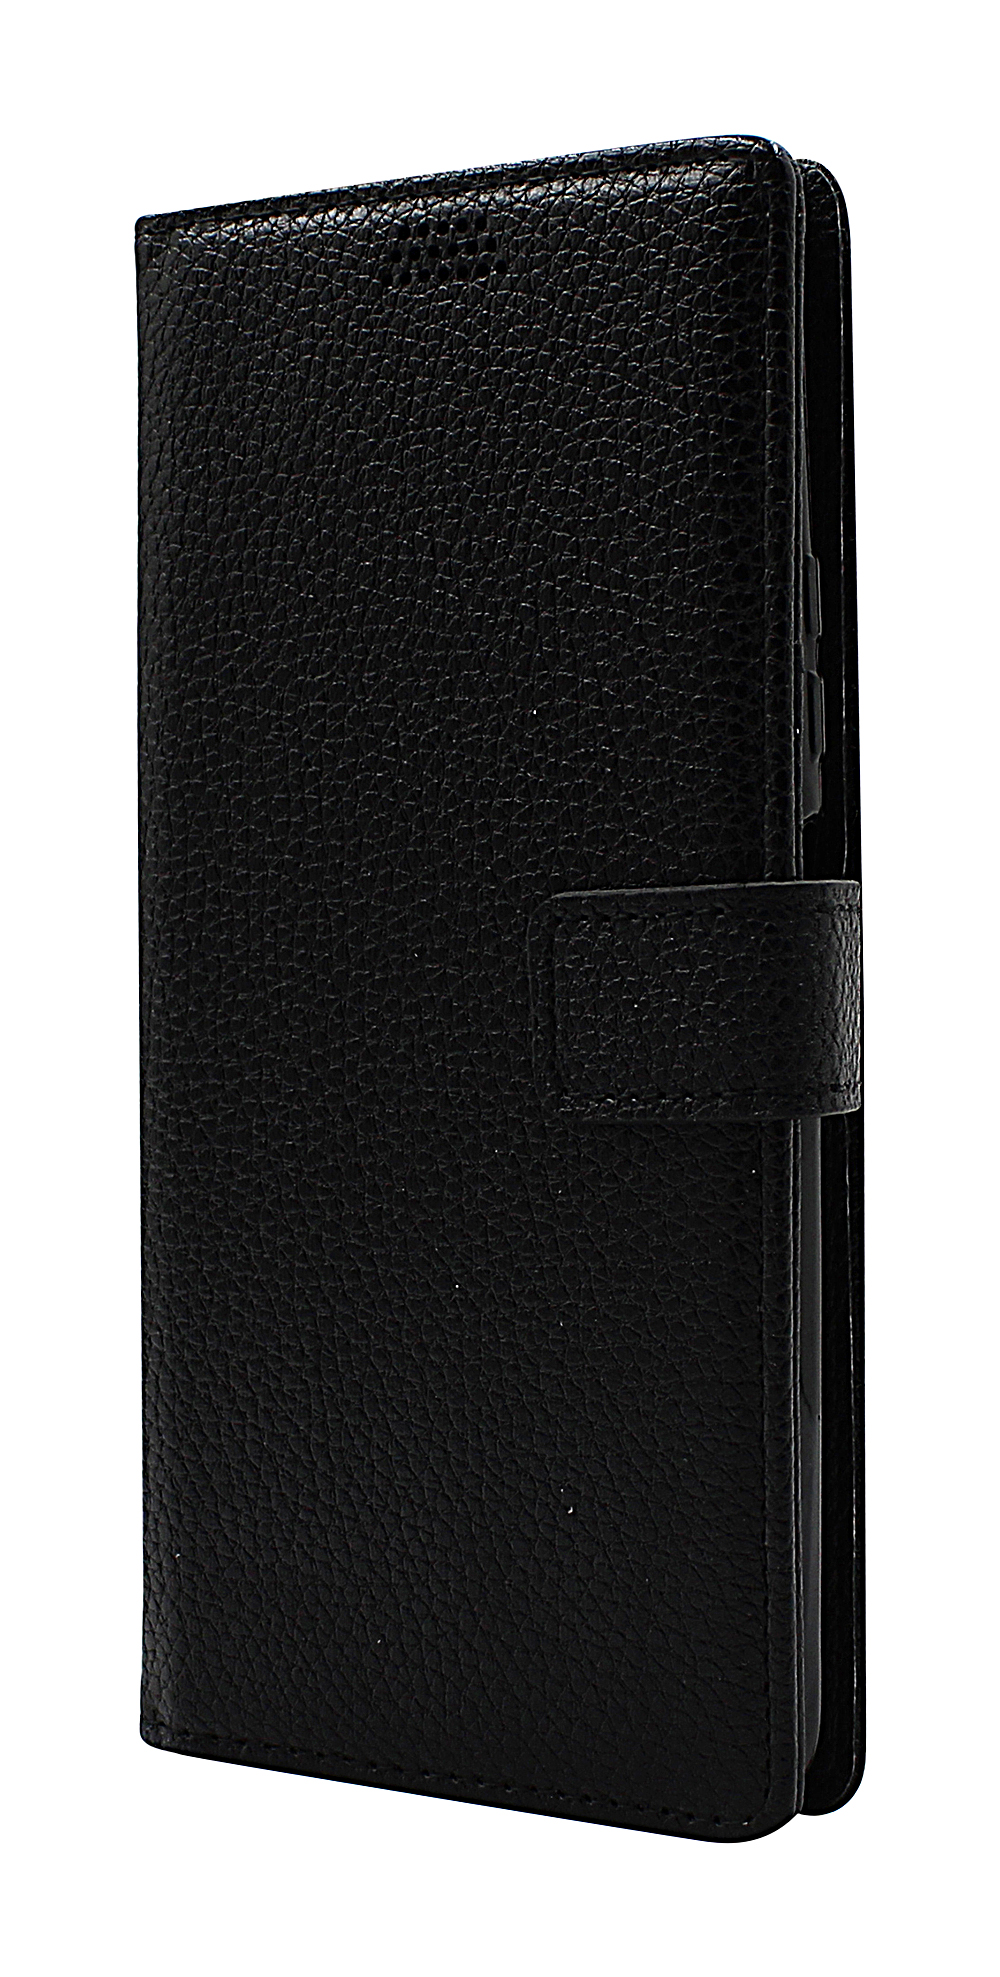 New Standcase Wallet Xiaomi Redmi Note 10 Pro